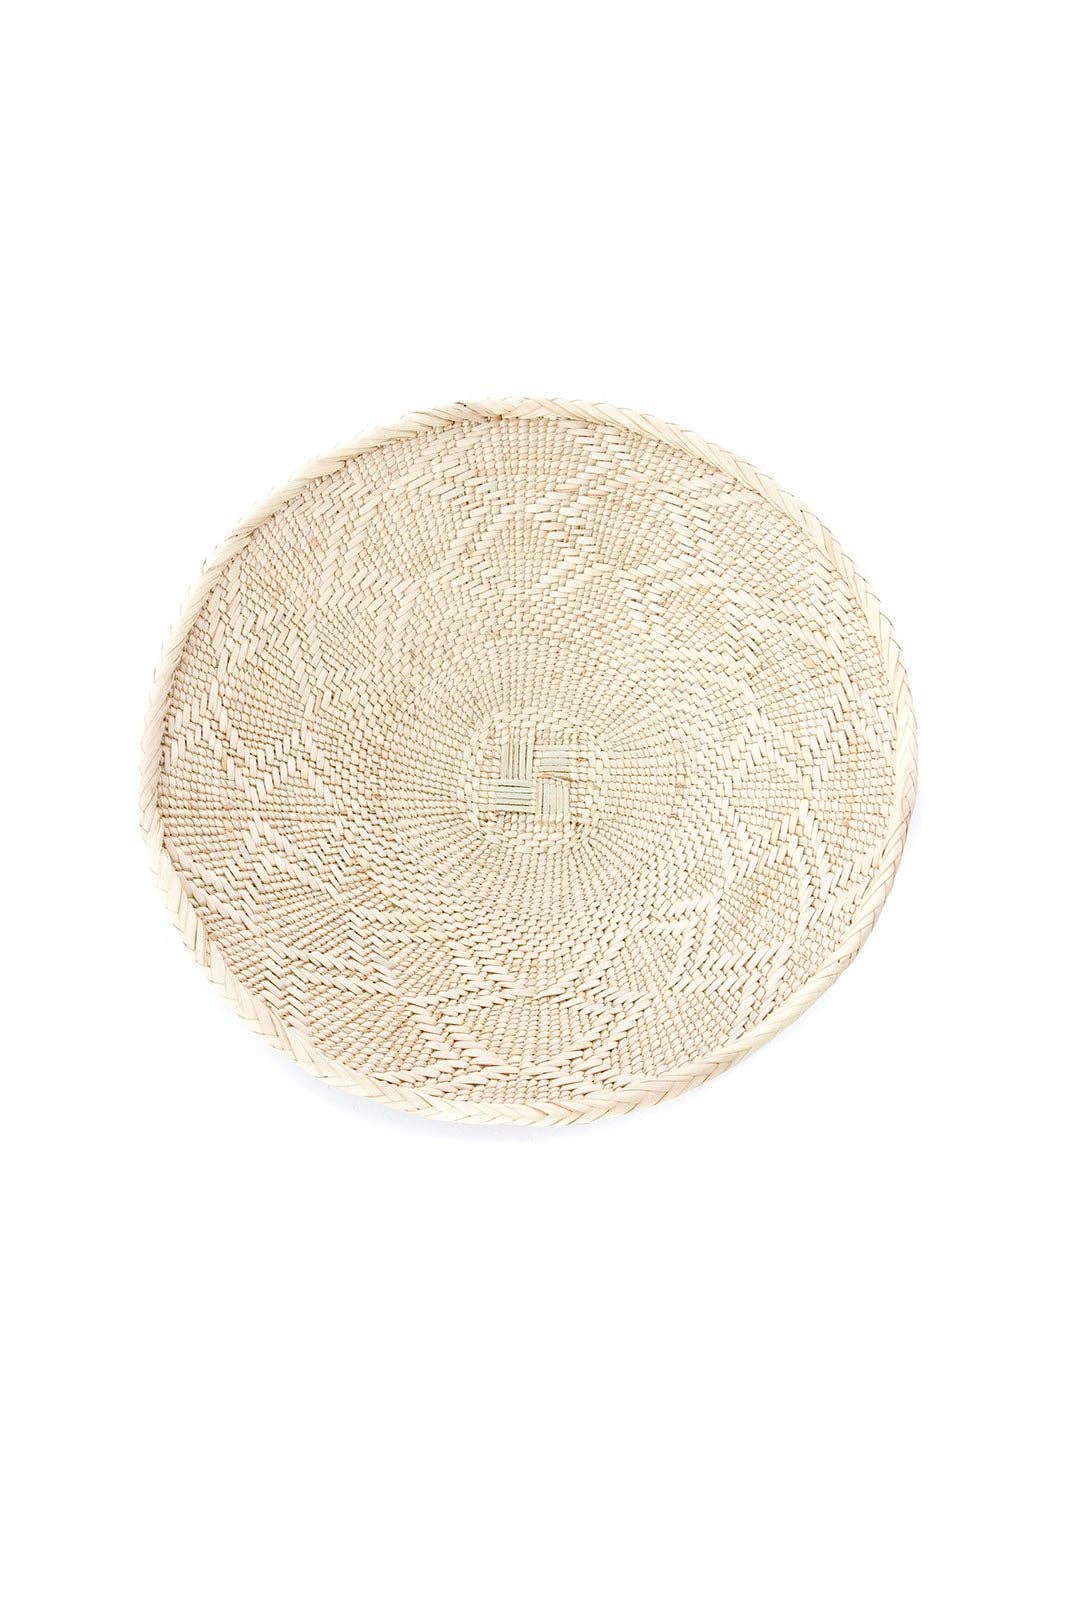 Tonga Filigree Wall Basket, Small